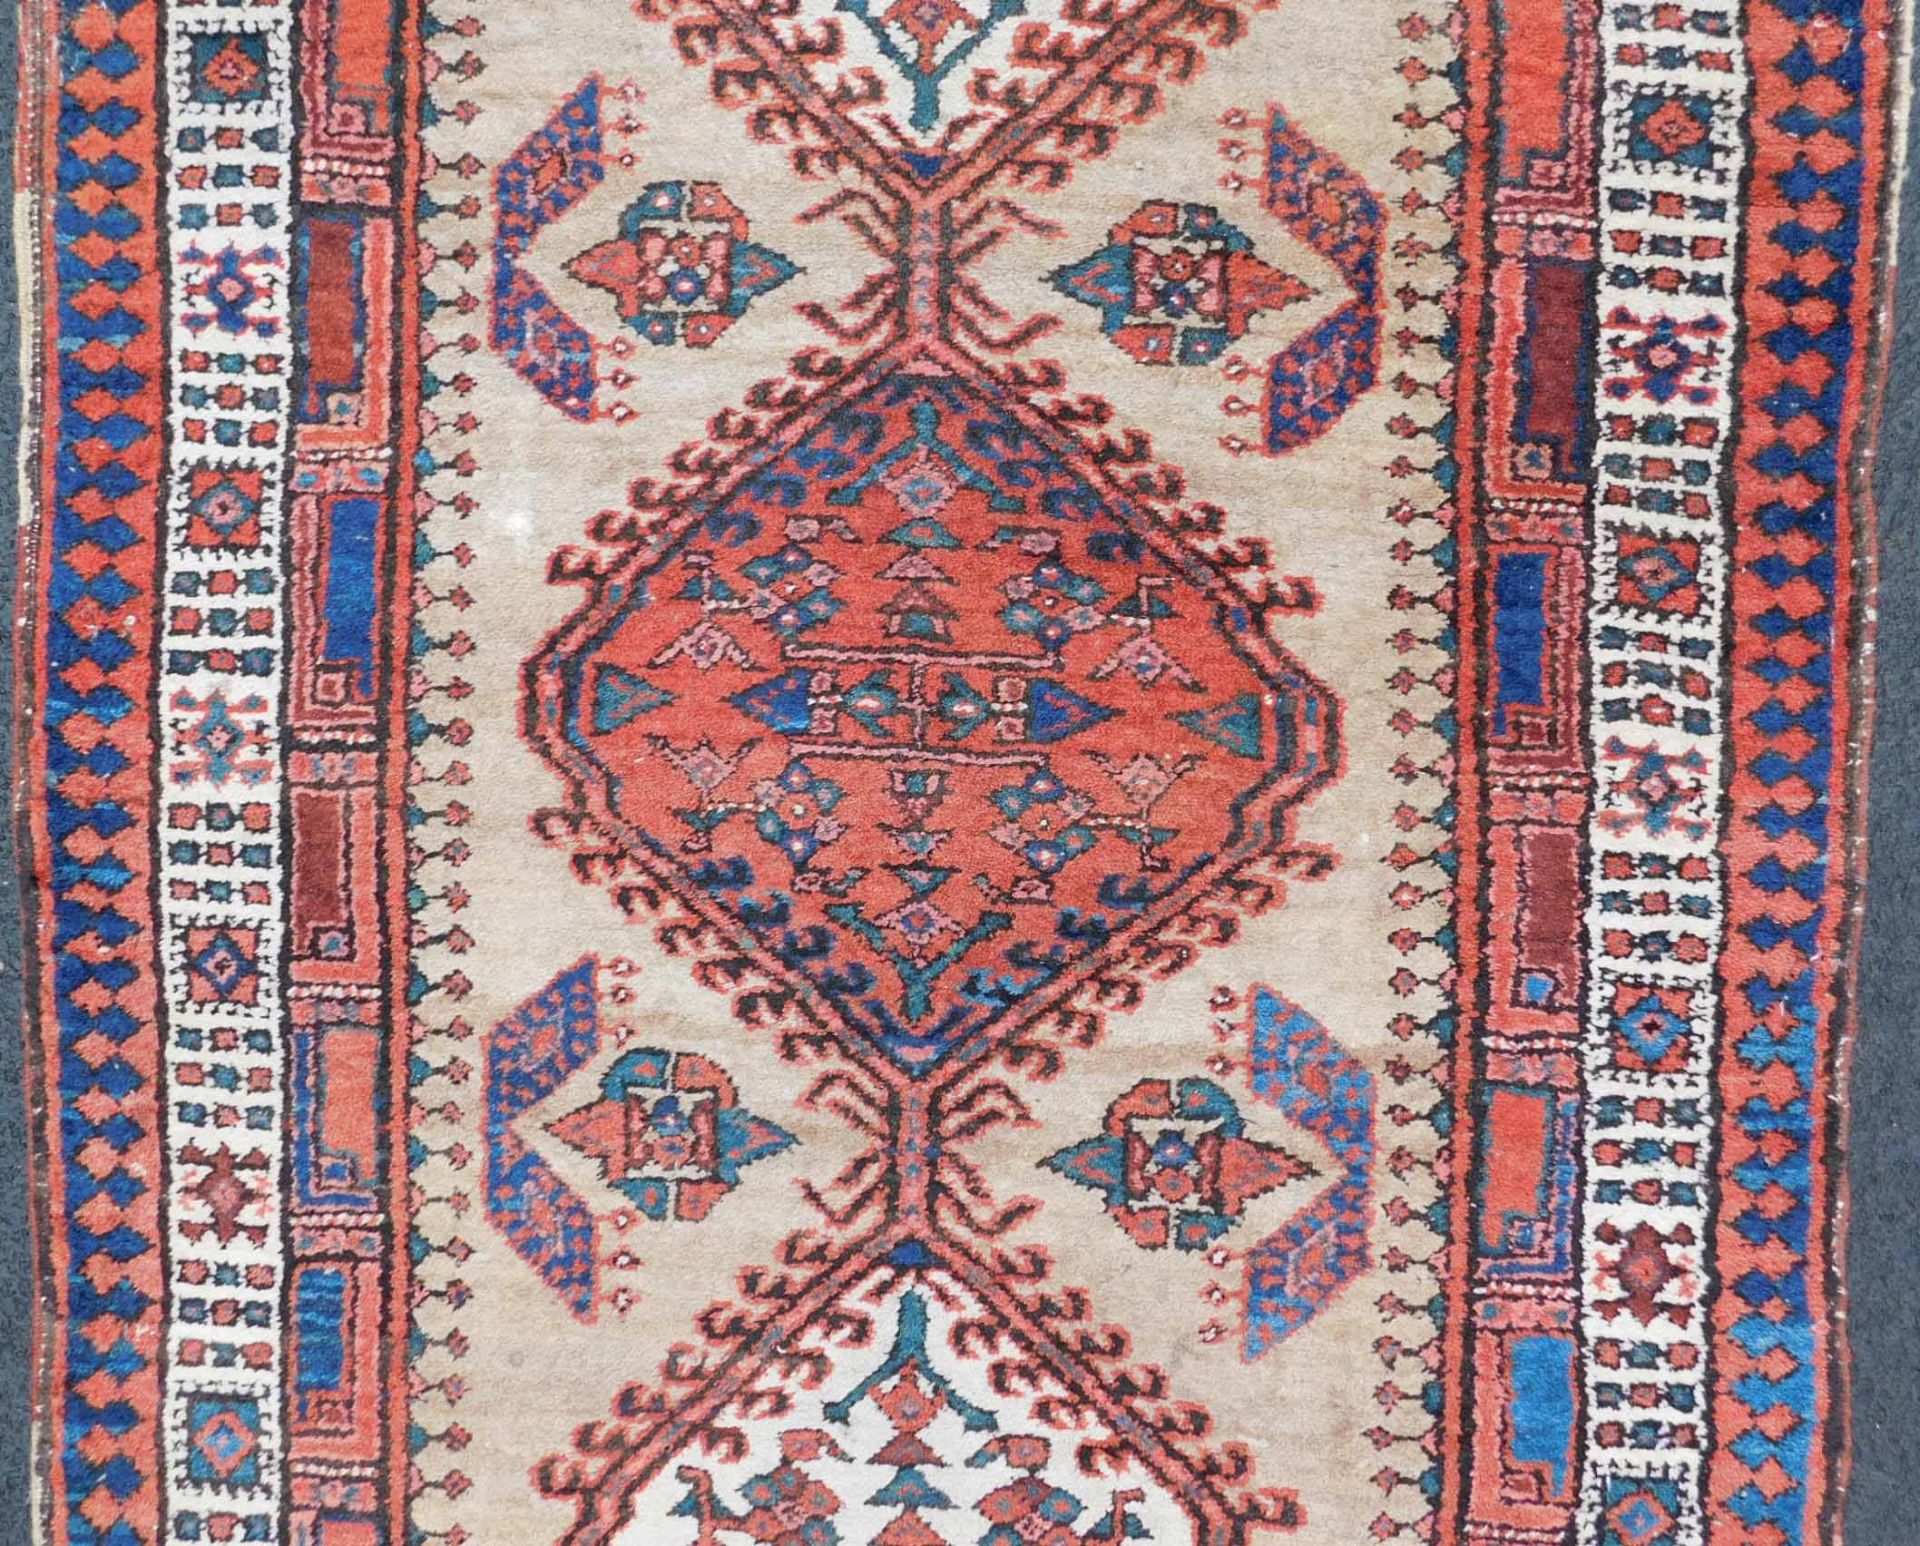 Meshkin Persian carpet. Gallery. Iran. Around 80 - 120 years old. - Image 3 of 6